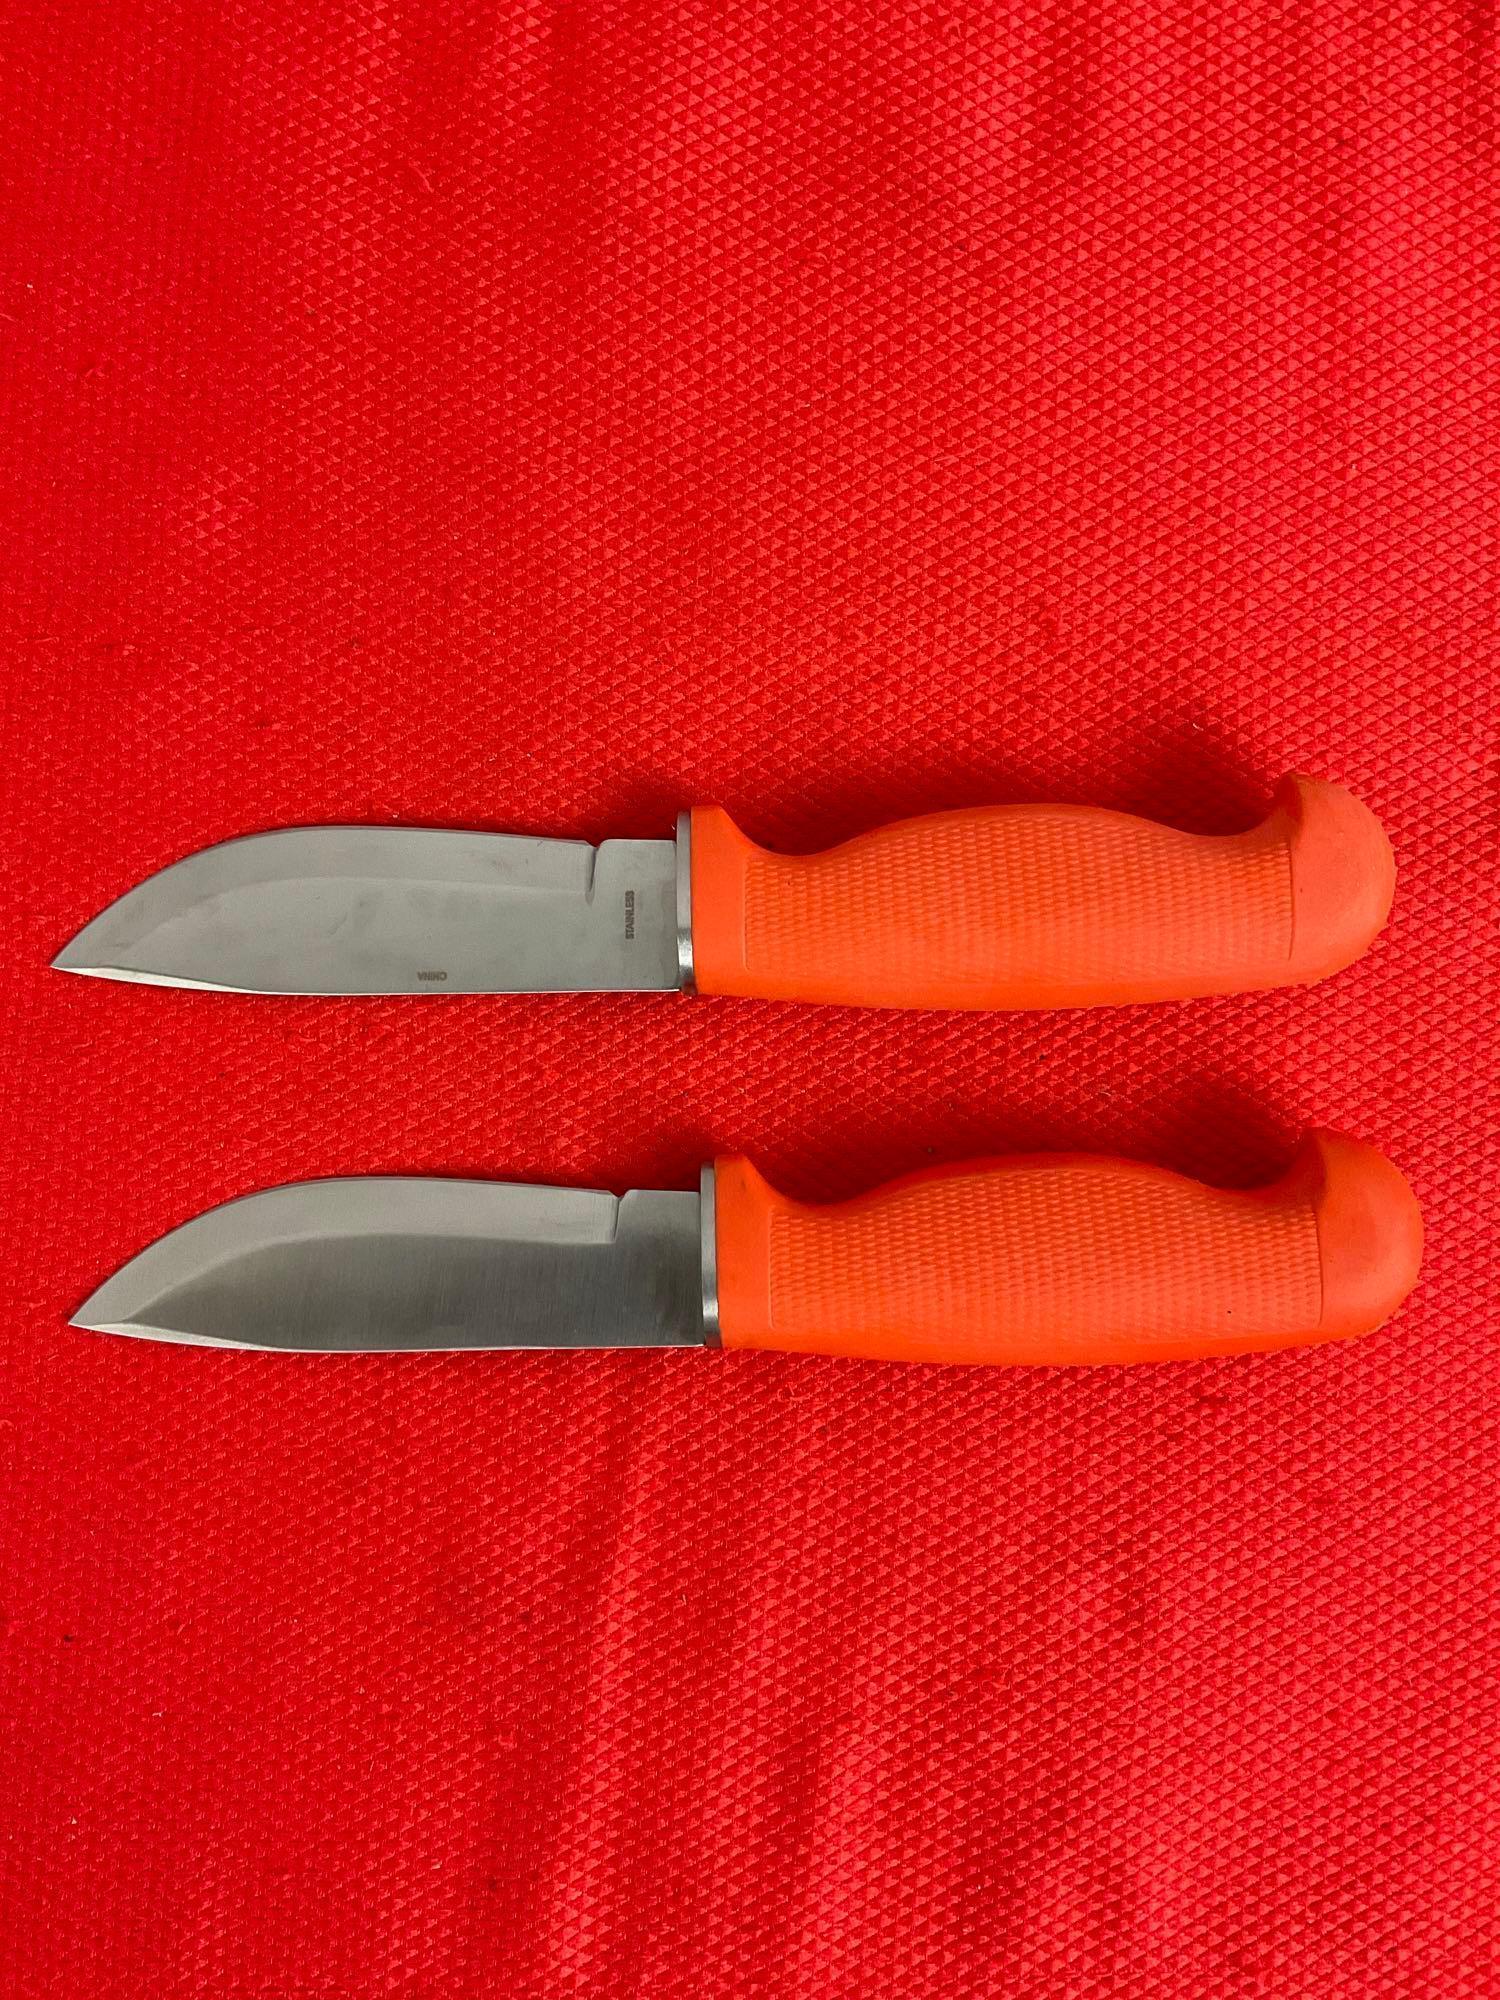 2 pcs Rite Edge 4" Hunter's Choice Hunting Knives Model 210978 w/ Nylon Sheathes. NIB. See pics.